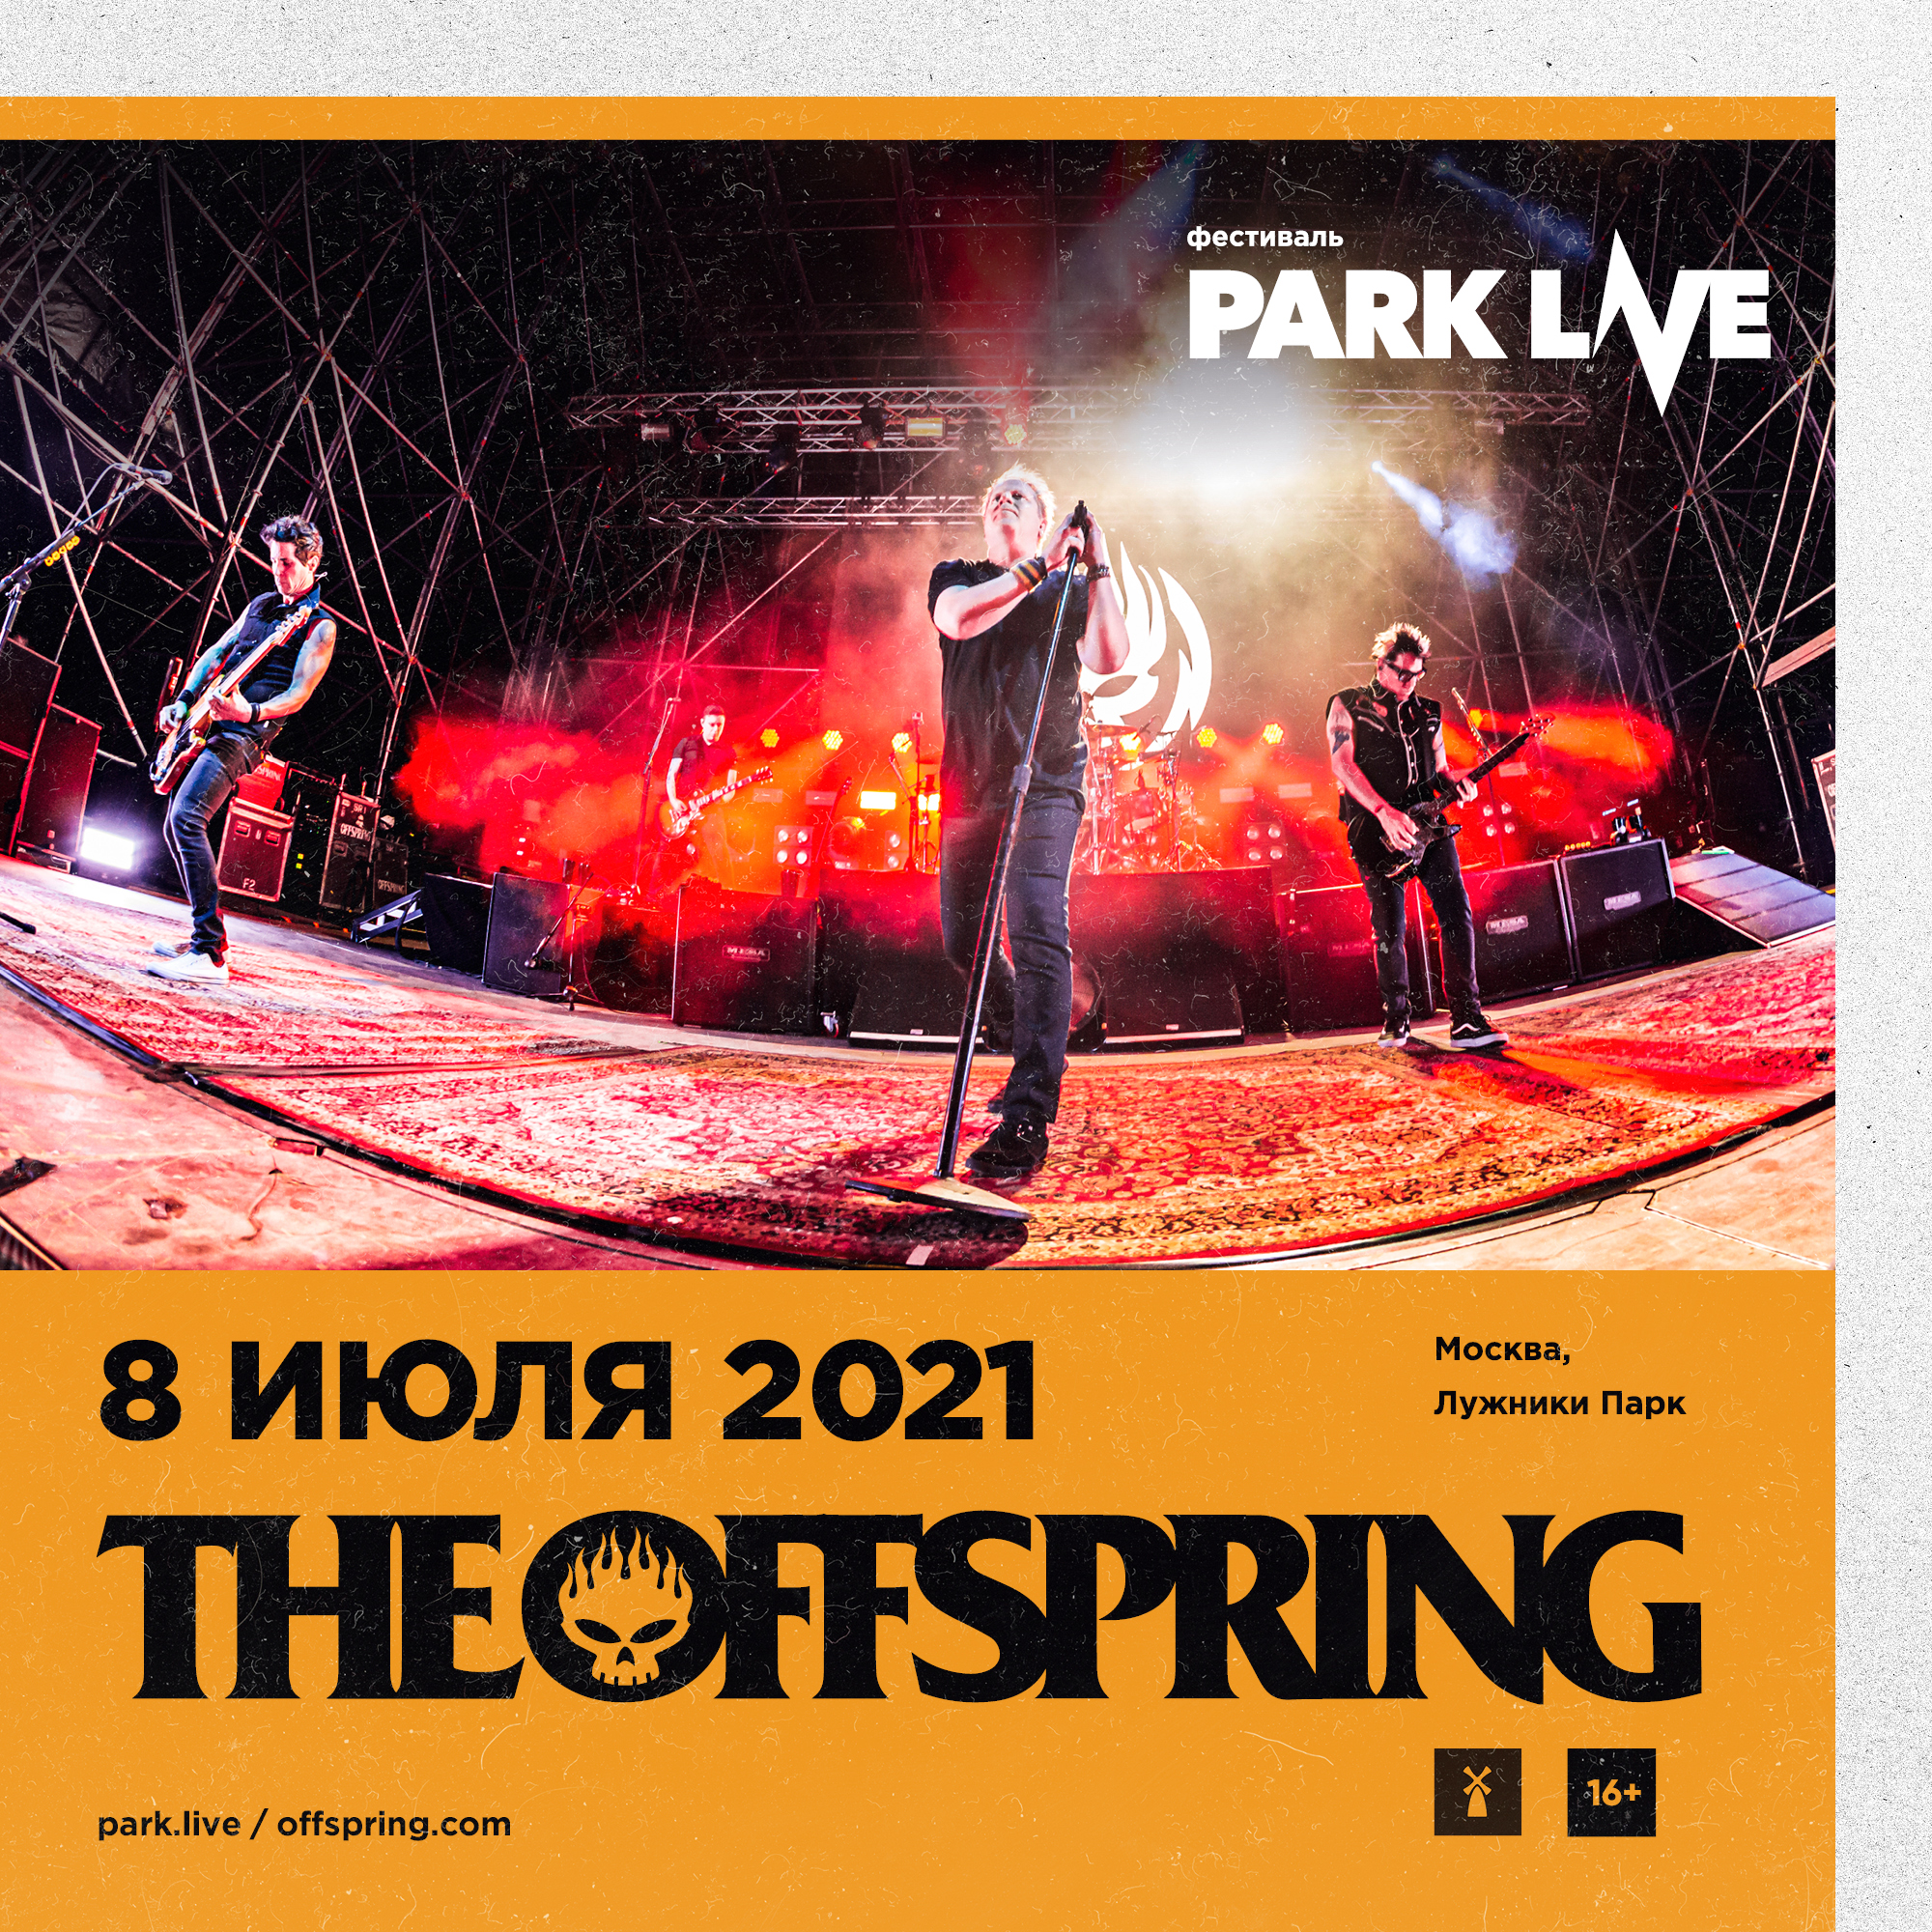 Park Live på Twitter: ".@offspring подтвердили свое участие на Park Live 2021. Г